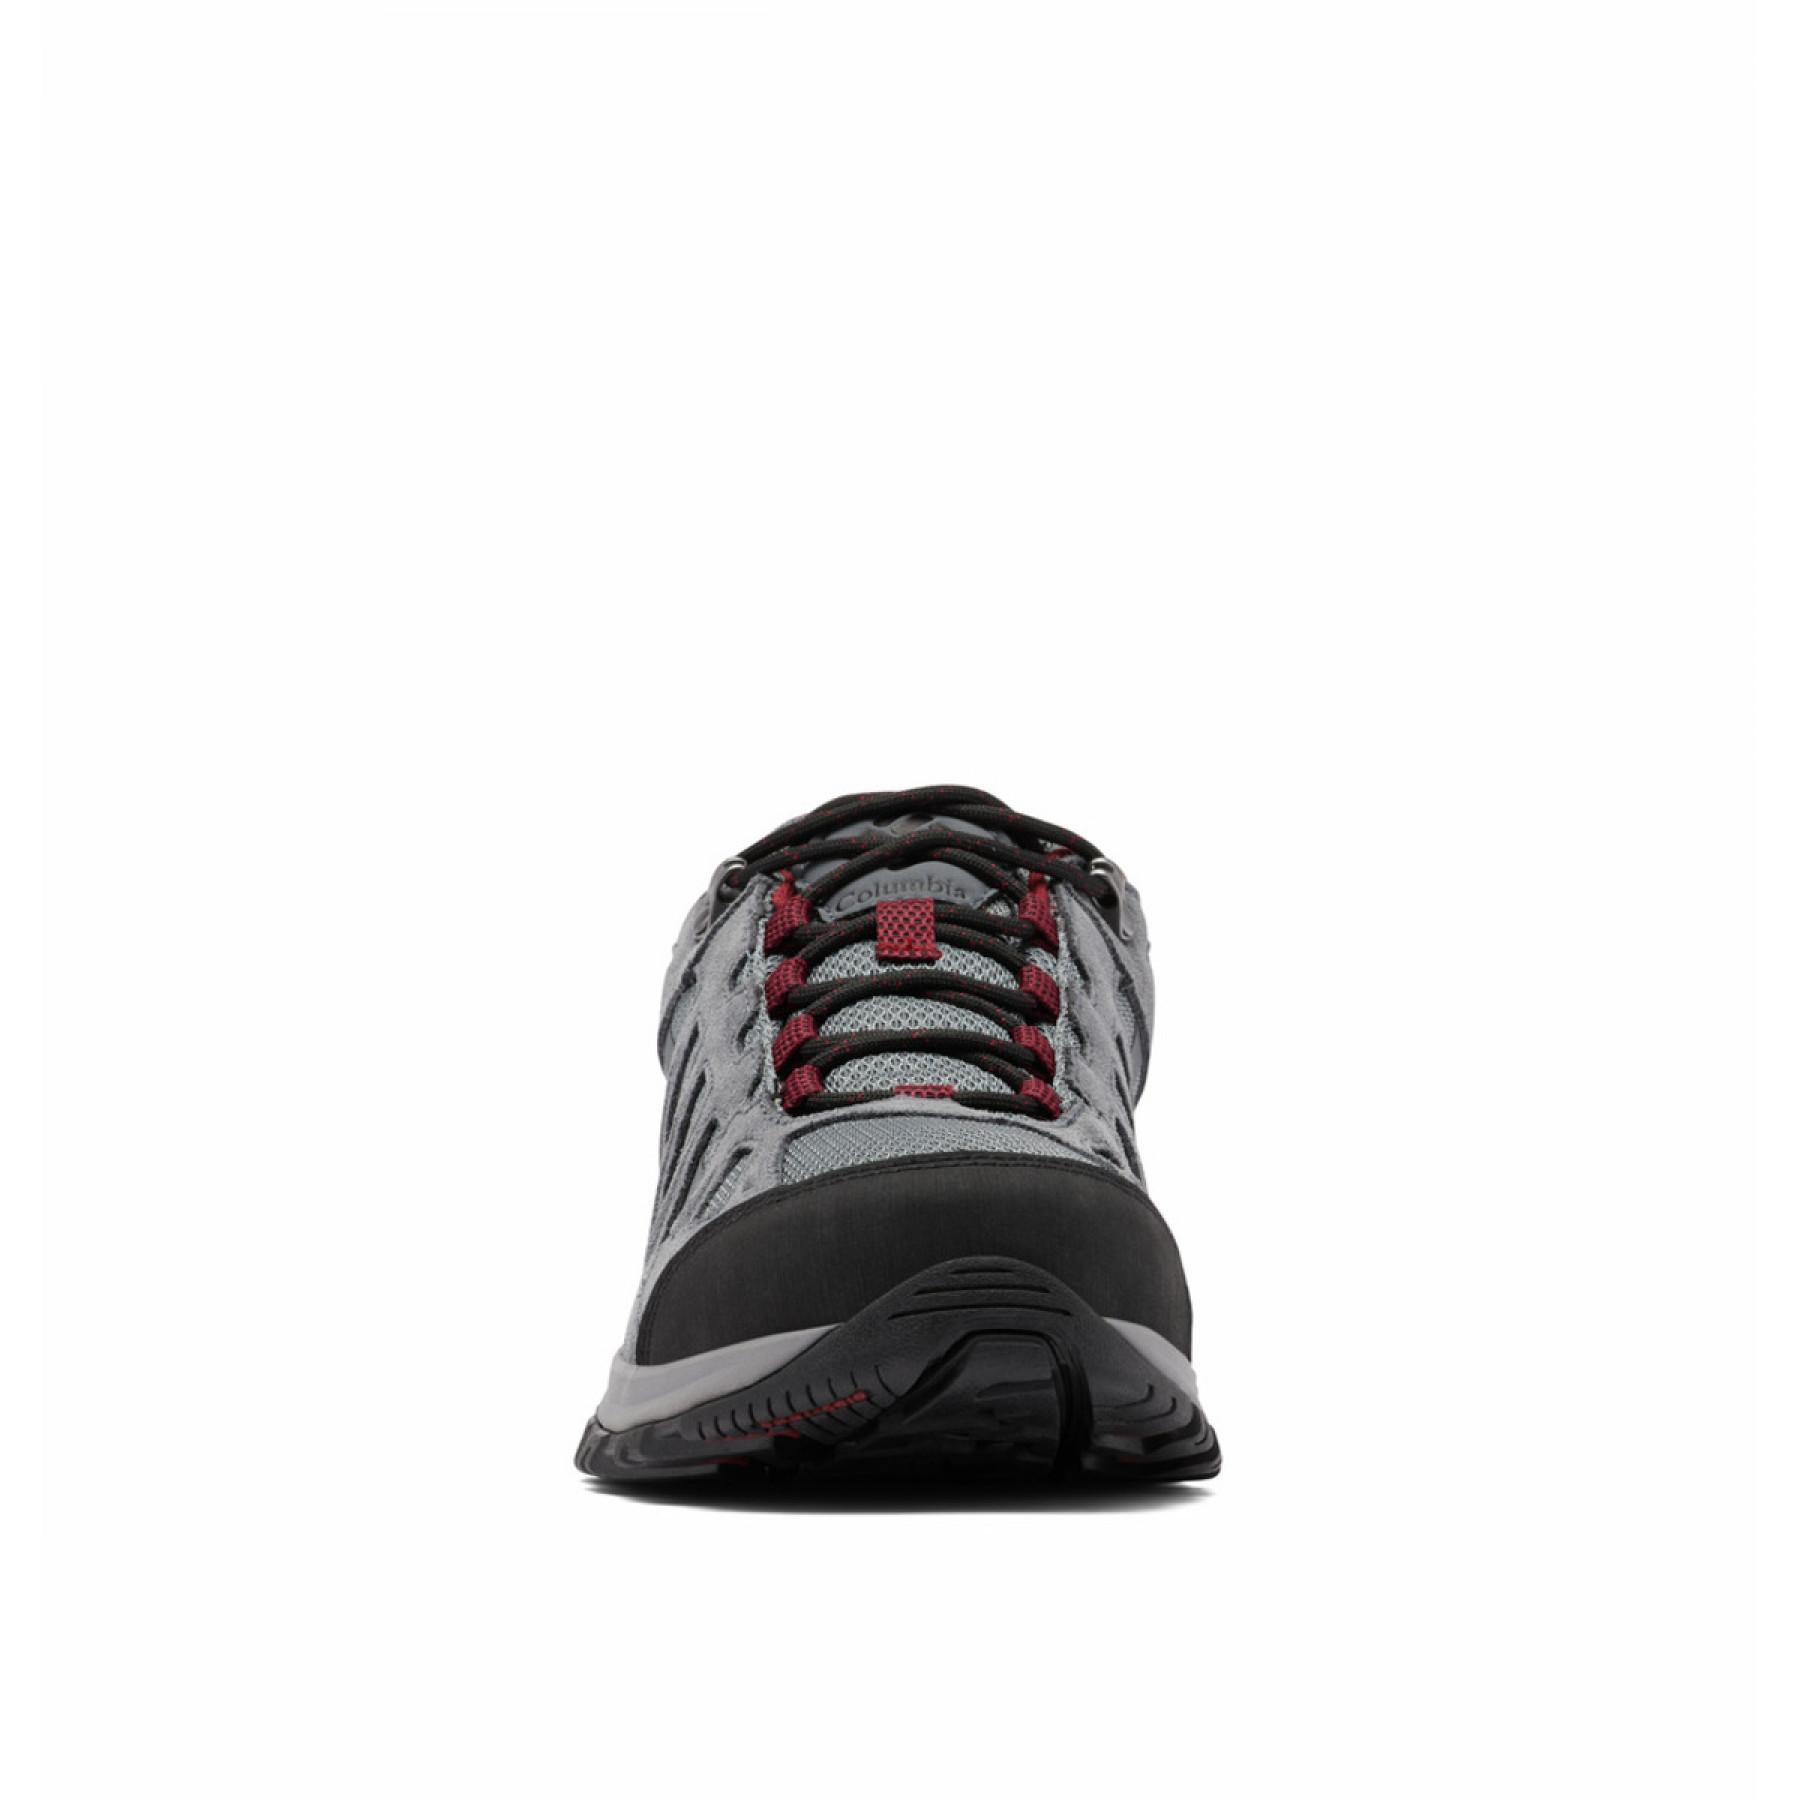 Chaussures de randonnée imperméables Columbia Redmond III